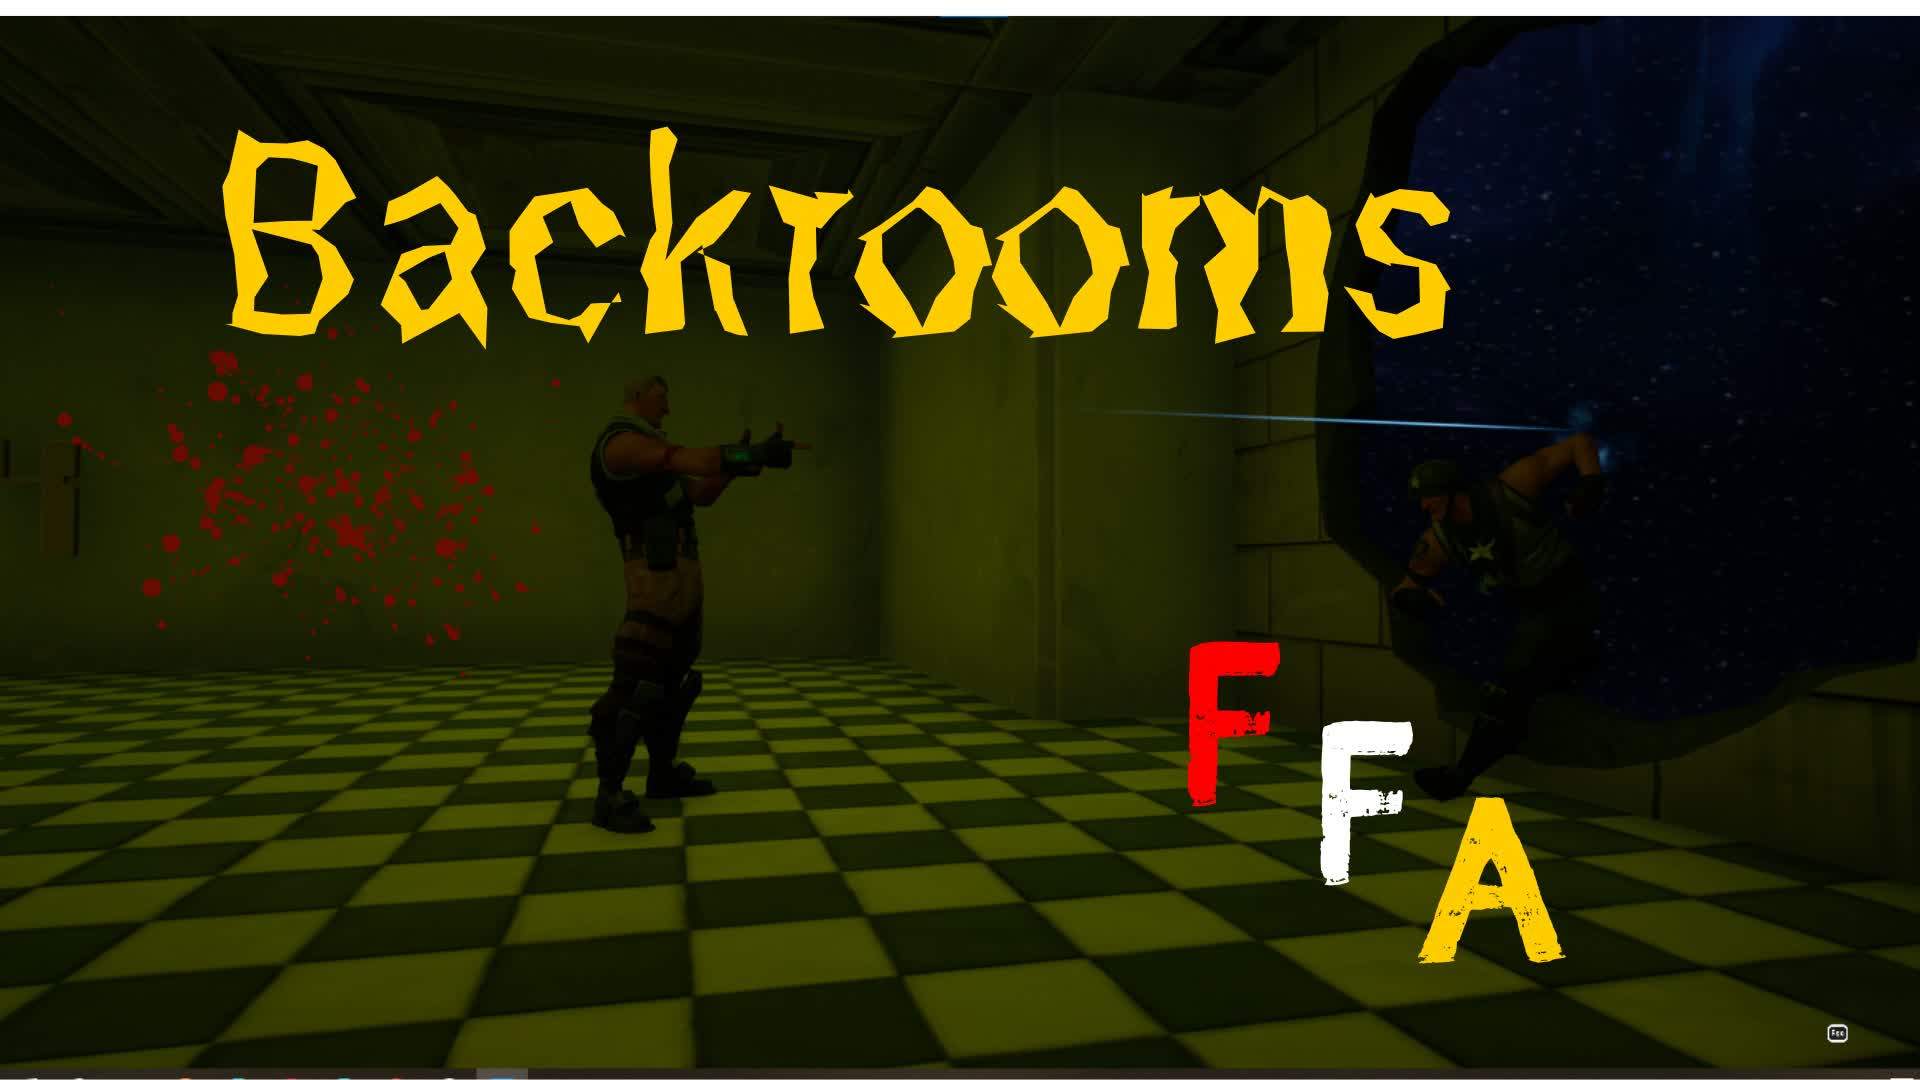 Backrooms FFA